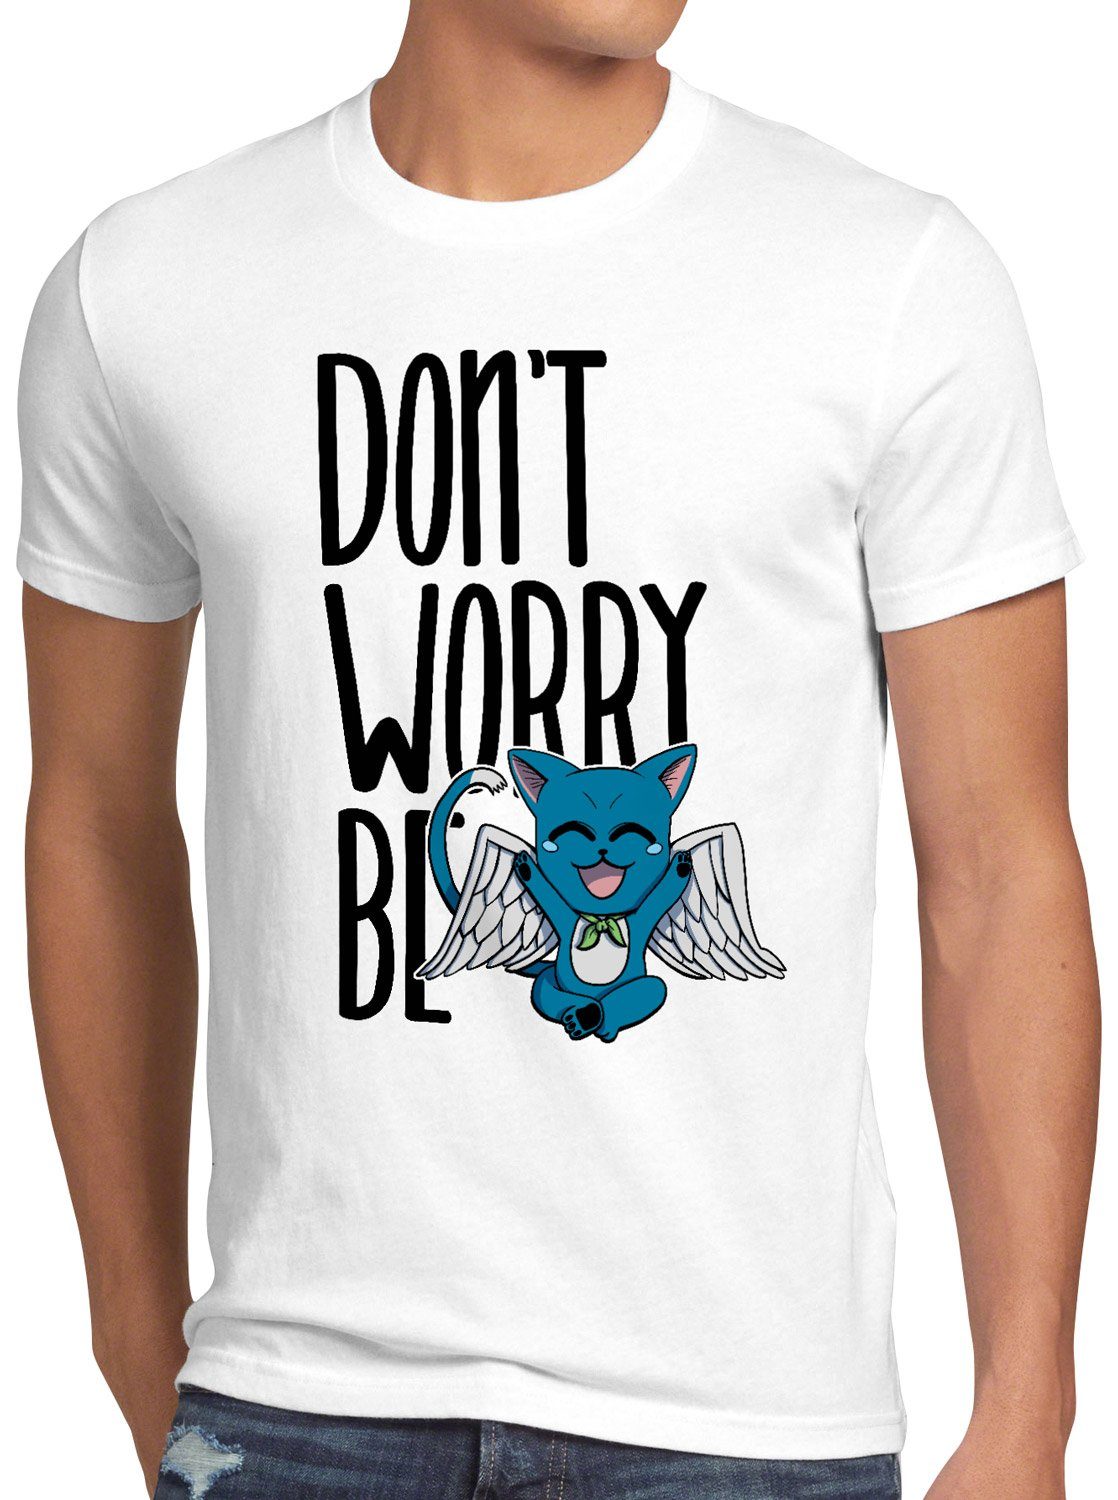 be Don't worry weiß tail Herren Print-Shirt style3 Happy japan anime fairy manga T-Shirt